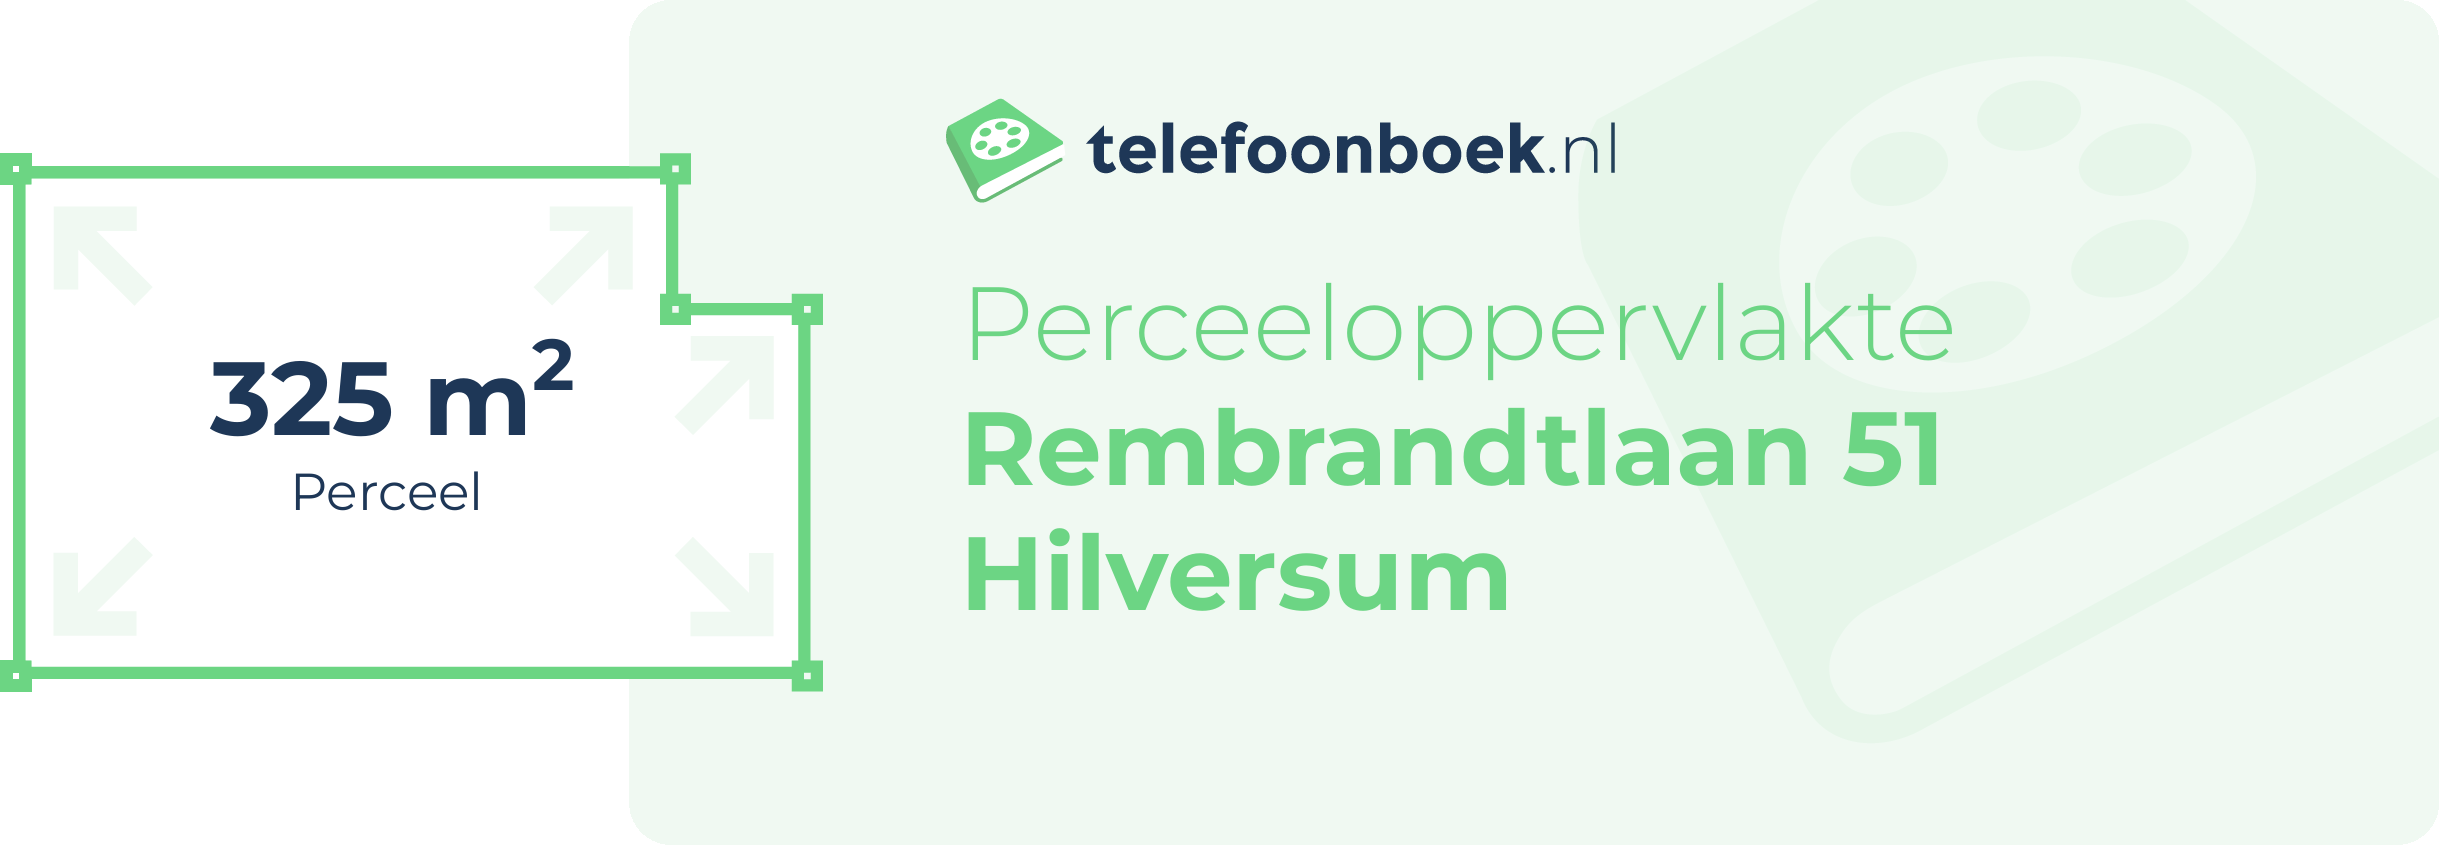 Perceeloppervlakte Rembrandtlaan 51 Hilversum